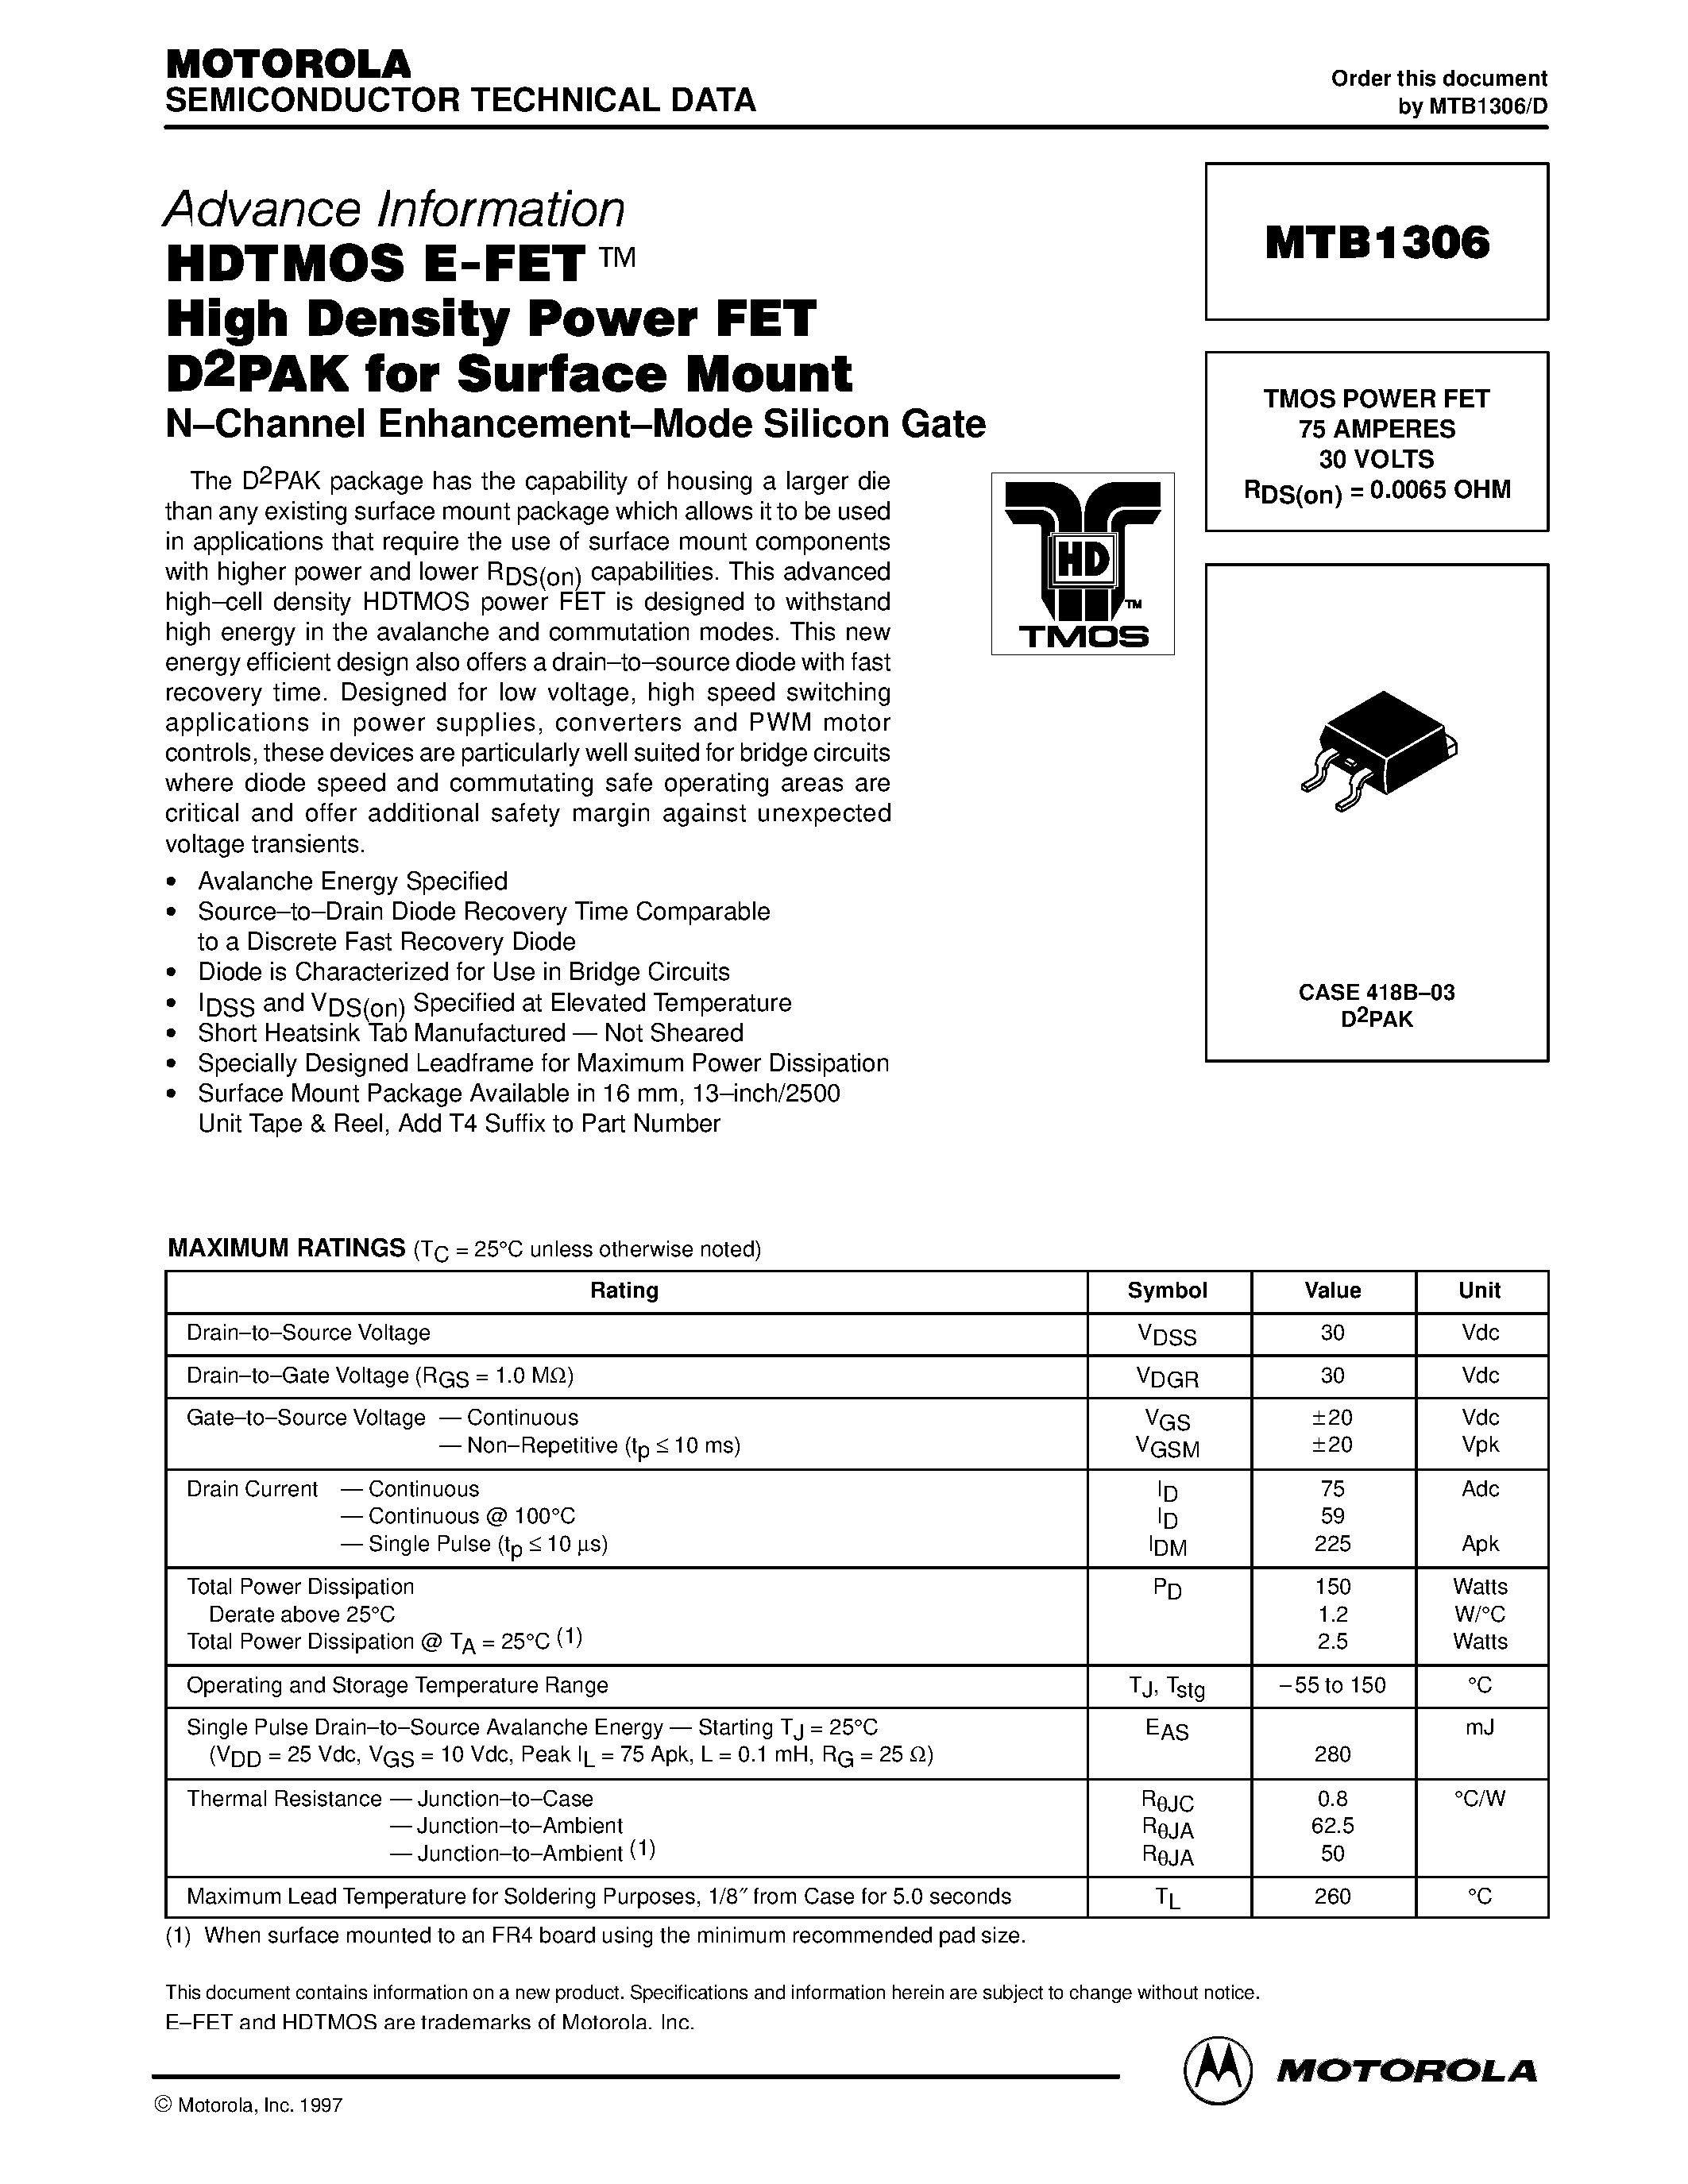 Datasheet MTB1306 - TMOS POWER FET 75 AMPERES page 1